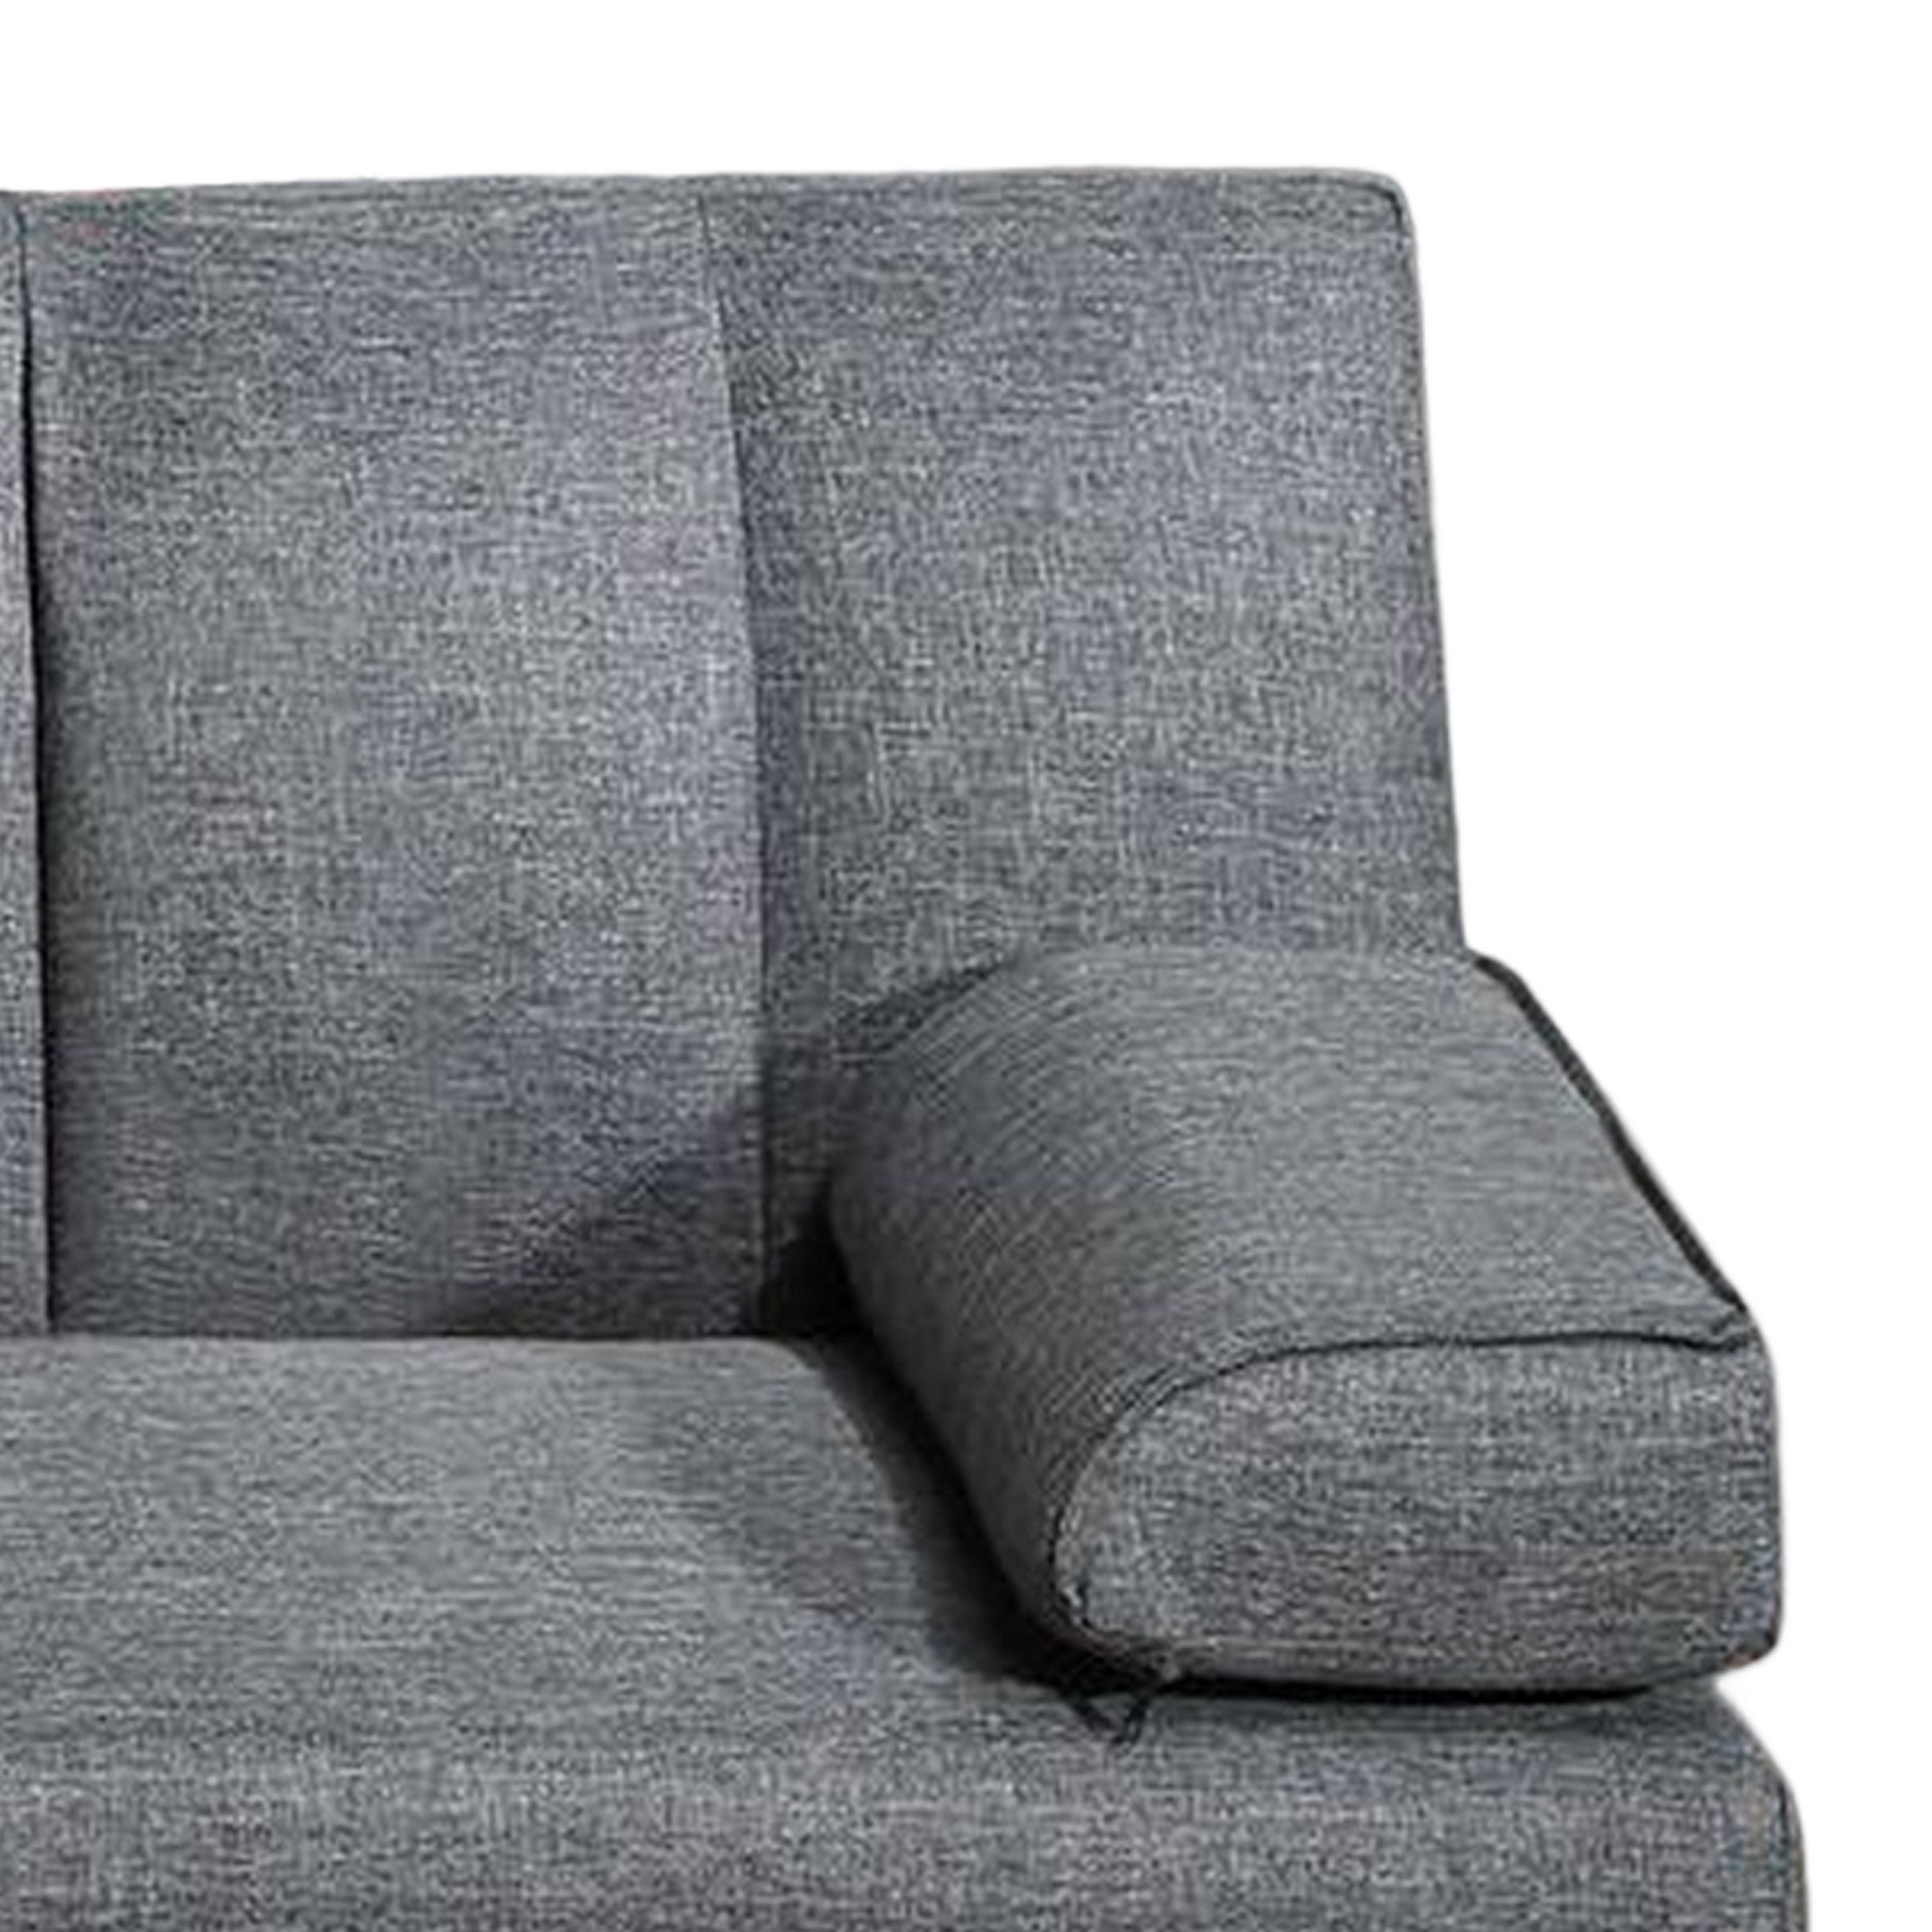 Dora 71 Inch Adjustable Futon Sofa Bed With Vertical Channel Tufting, Gray- Saltoro Sherpi